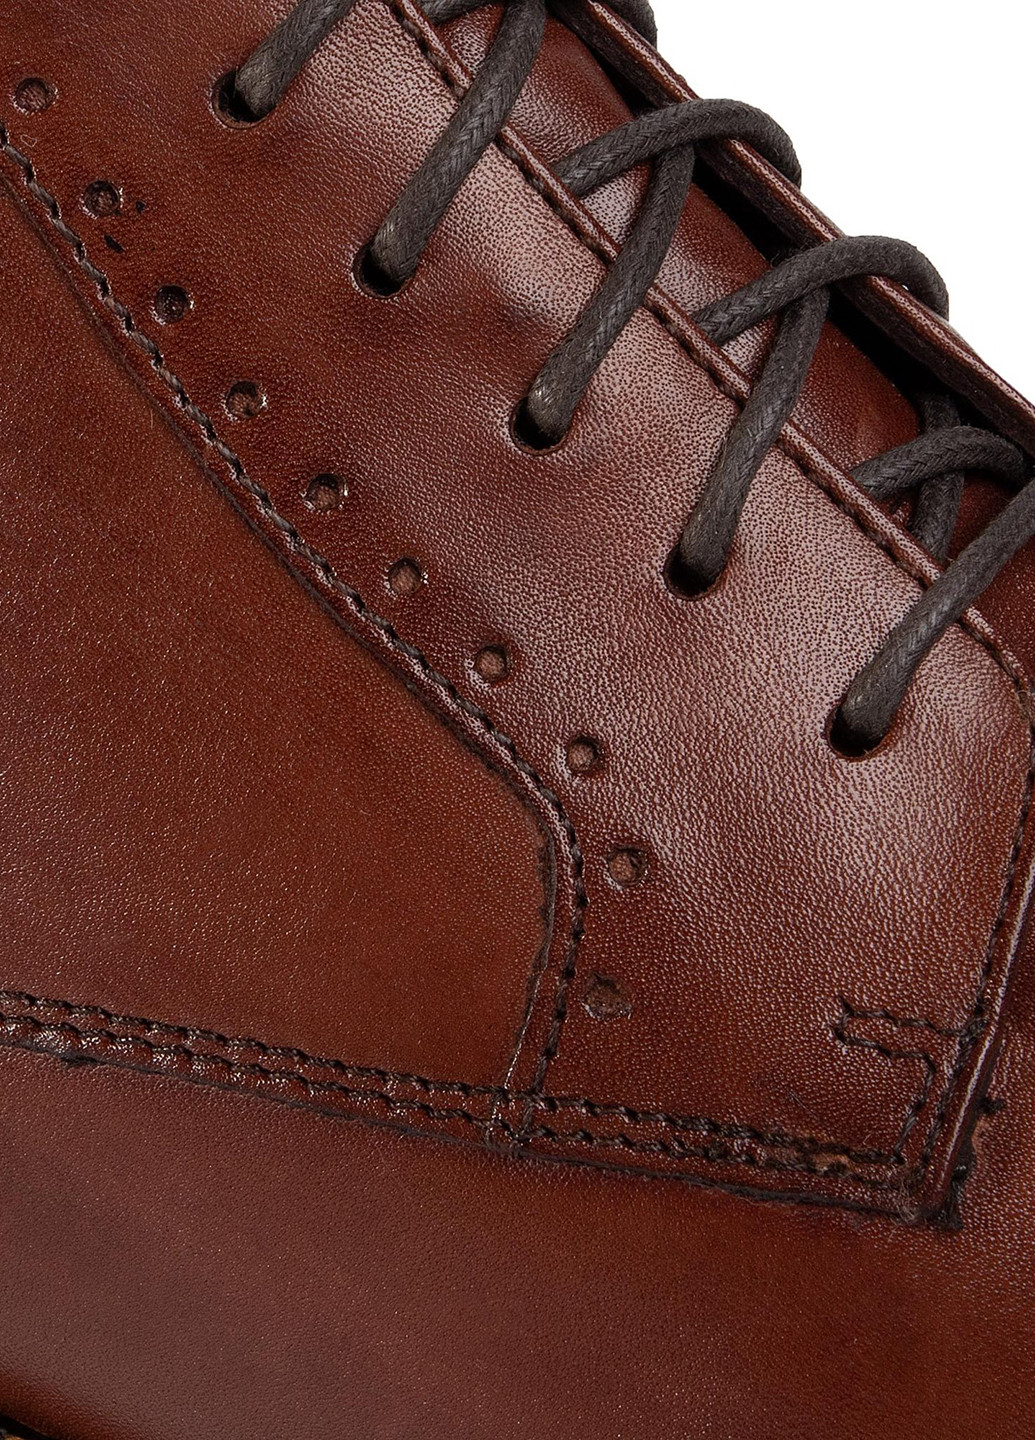 Темно-коричневые осенние черевики lasocki for men mb-steven-06 Lasocki for men